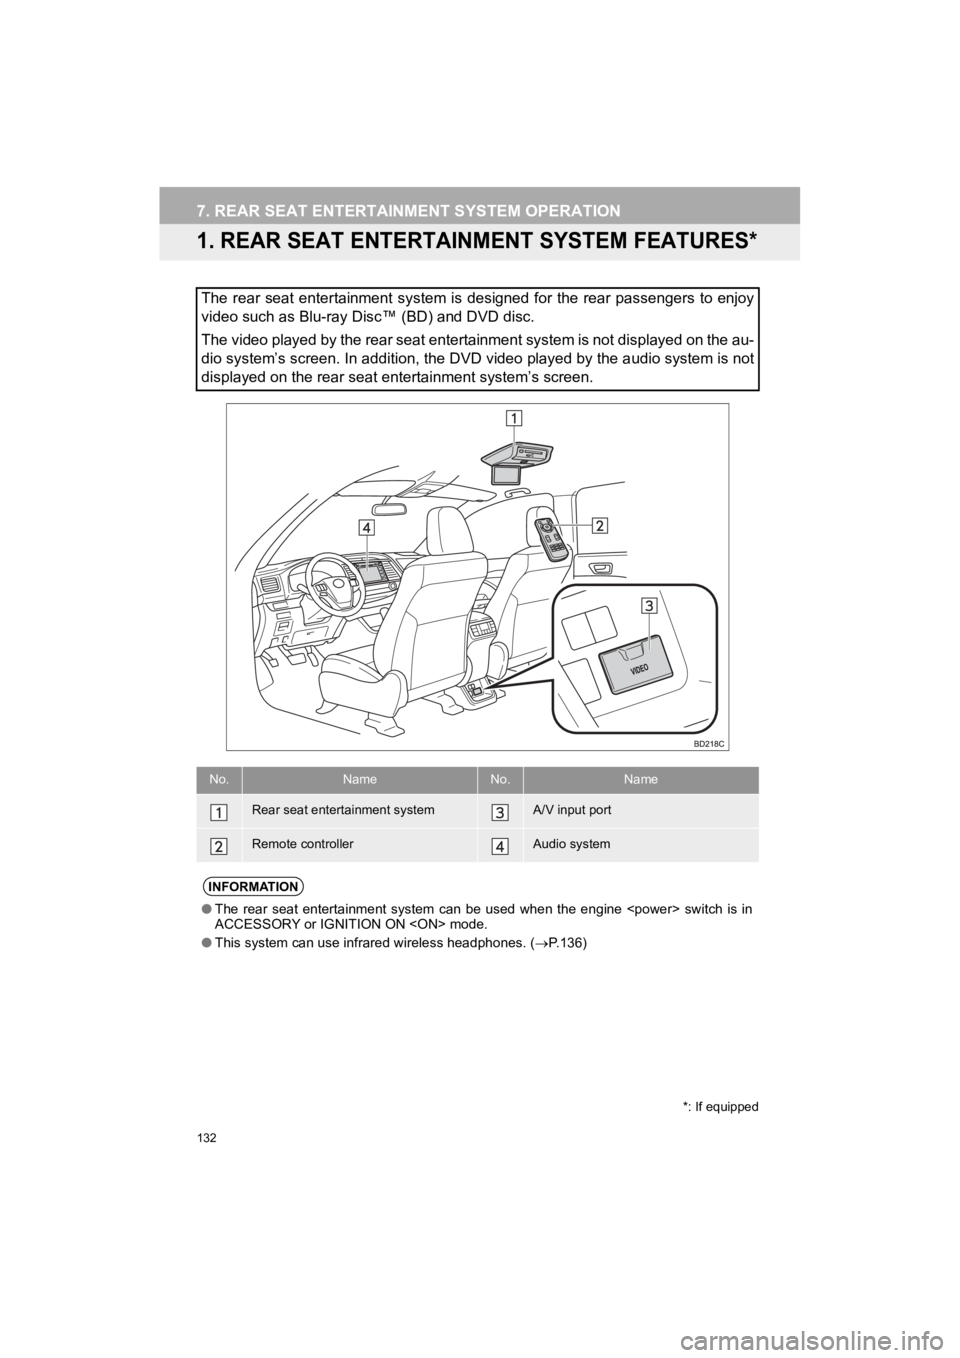 TOYOTA HIGHLANDER HYBRID 2019  Accessories, Audio & Navigation (in English) 132
HIGHLANDER_Navi_U
7. REAR SEAT ENTERTAINMENT SYSTEM OPERATION
1. REAR SEAT ENTERTAINMENT SYSTEM FEATURES*
The  rear  seat  entertainment  system is designed  for the  rear  pas sengers to  enjoy
v